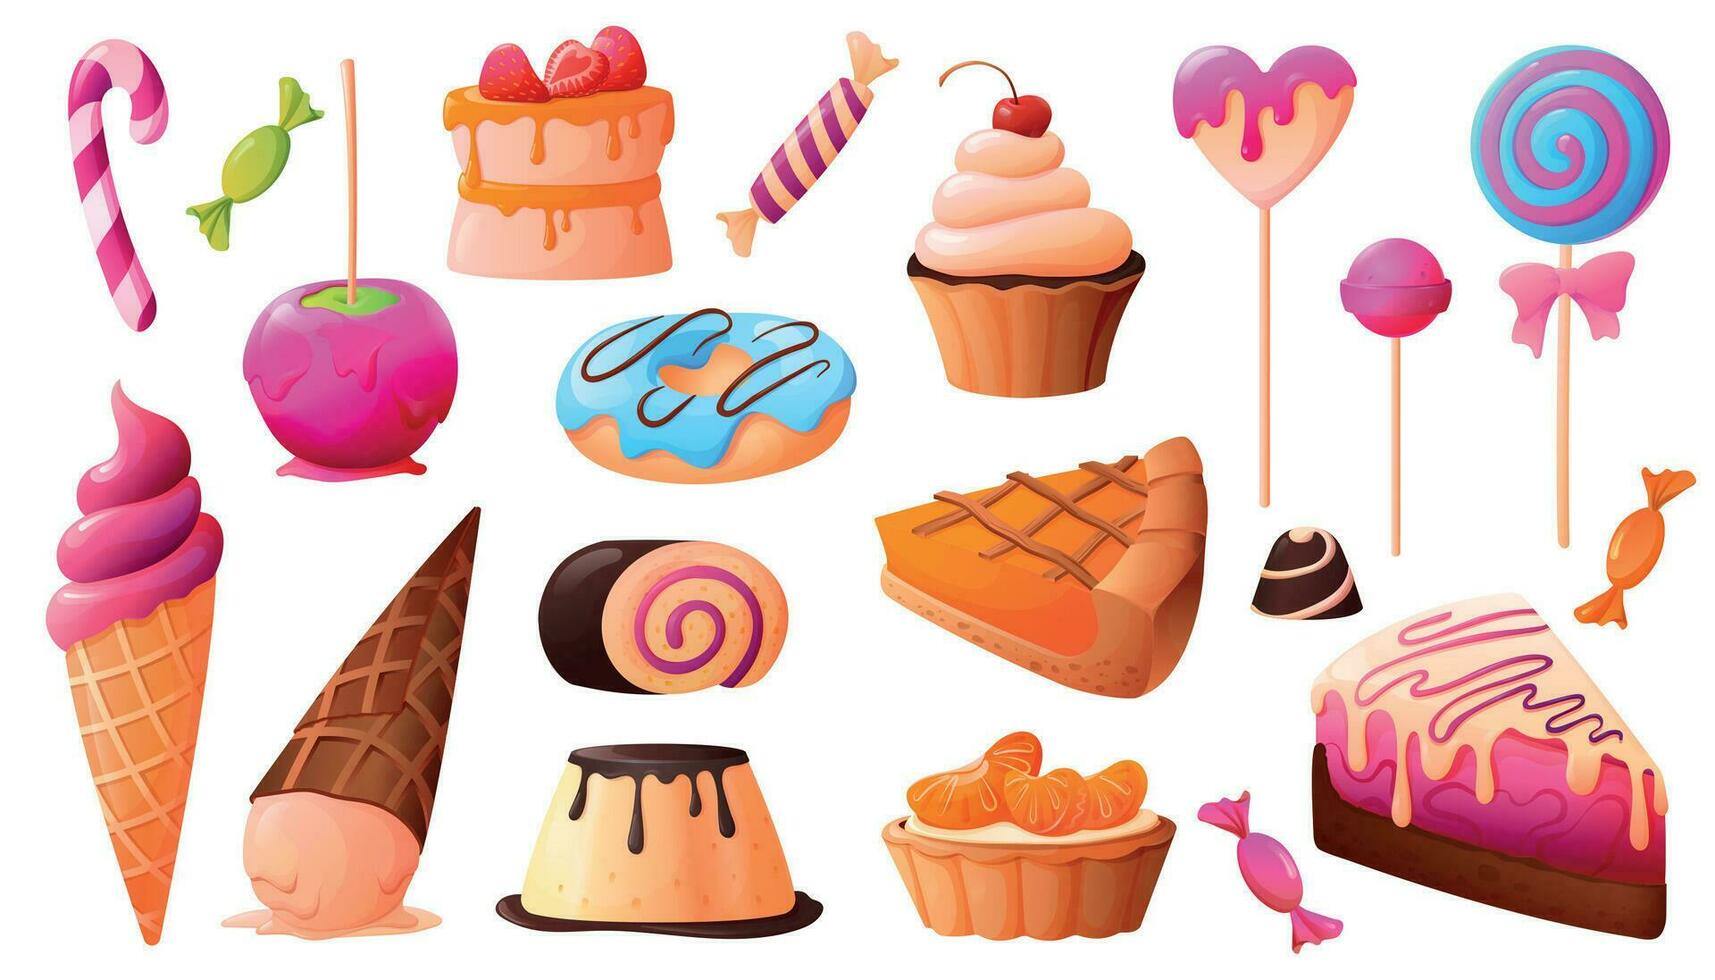 Candy Sweets Cartoon Set vector